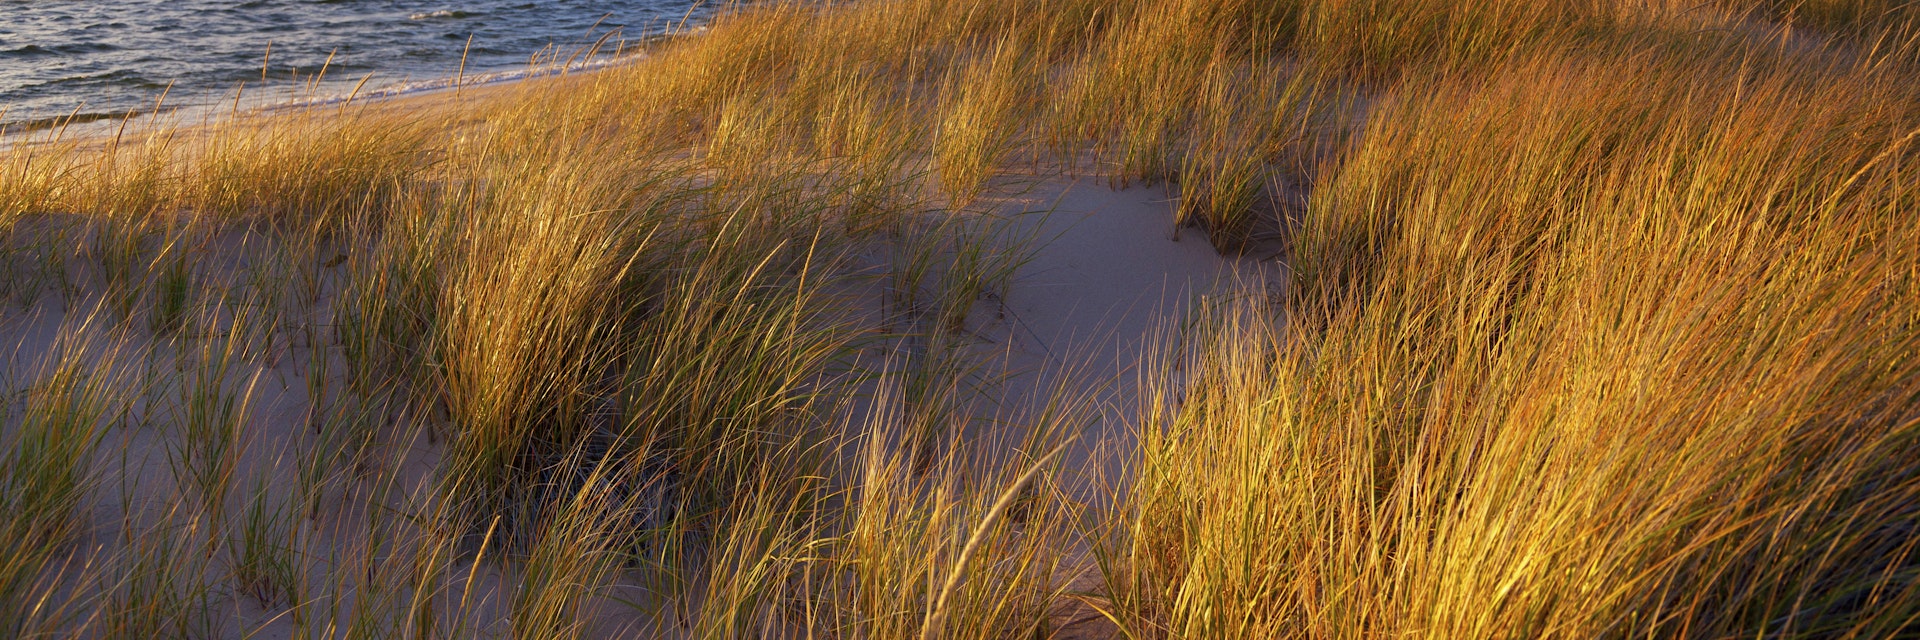 Dune Grass on Lake Michigan